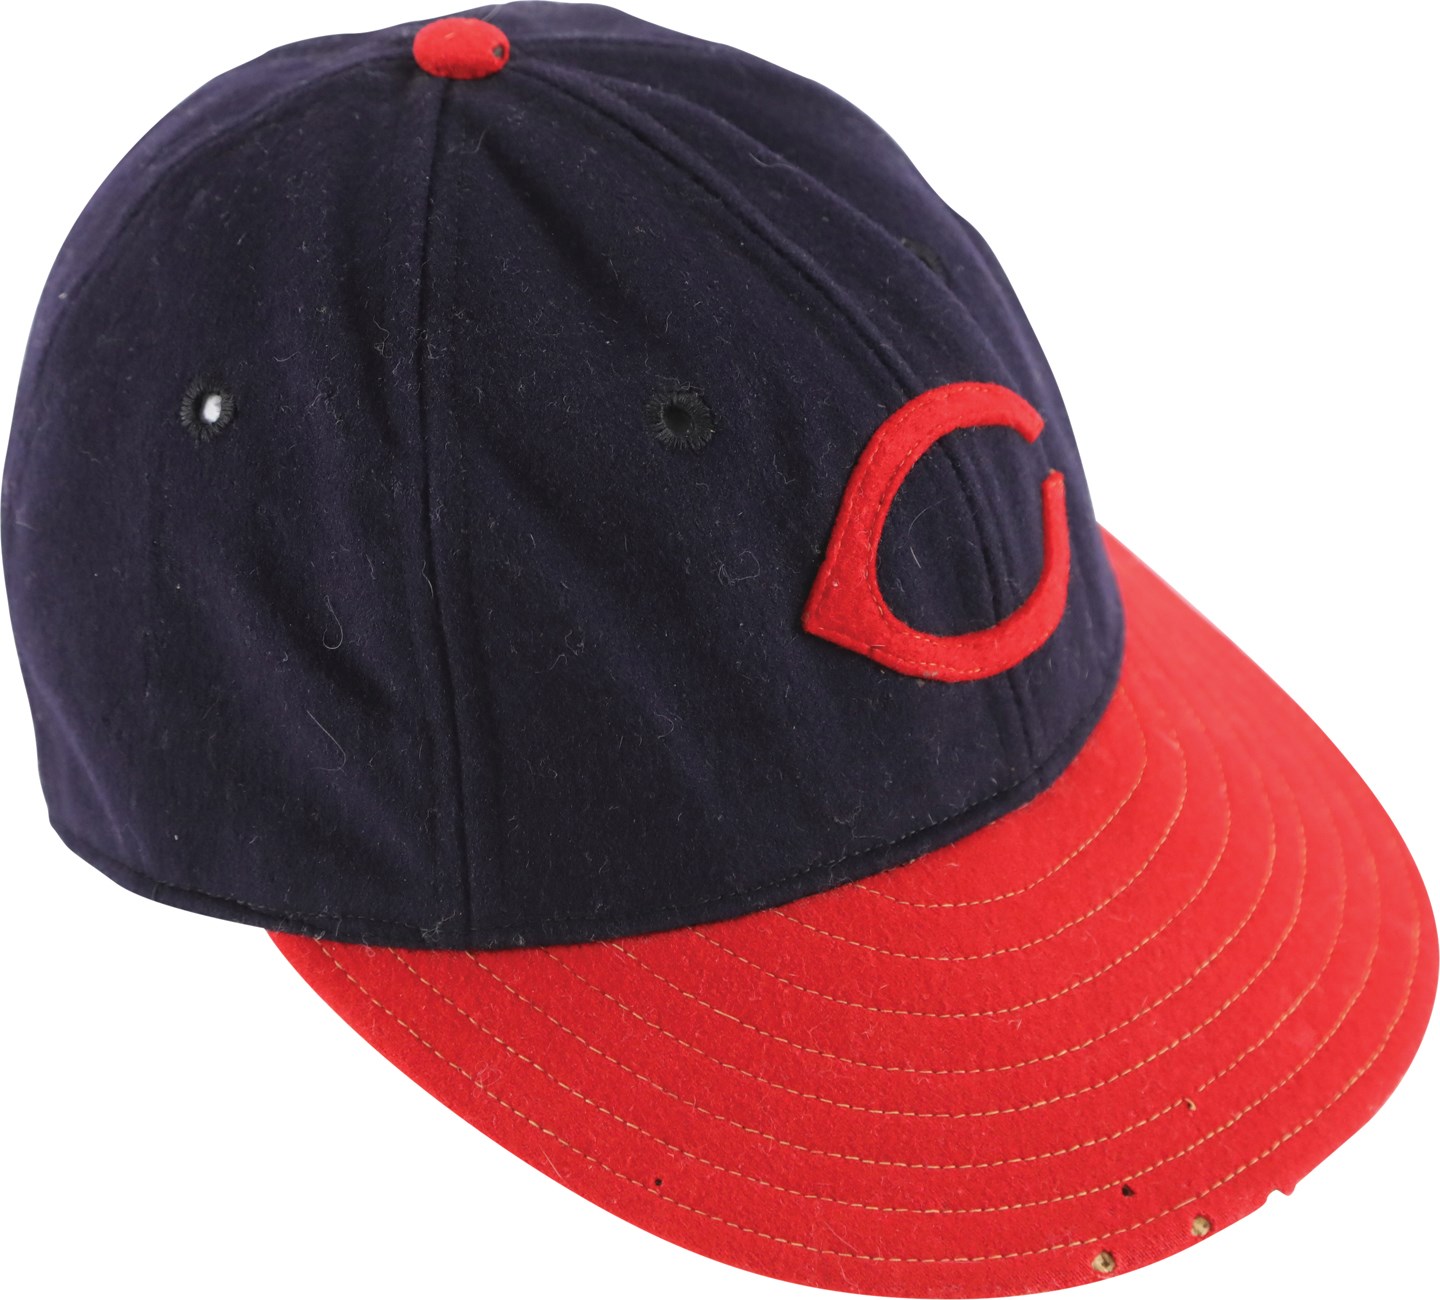 - Circa 1939 Harry Craft Cincinnati Reds Game Worn Hat